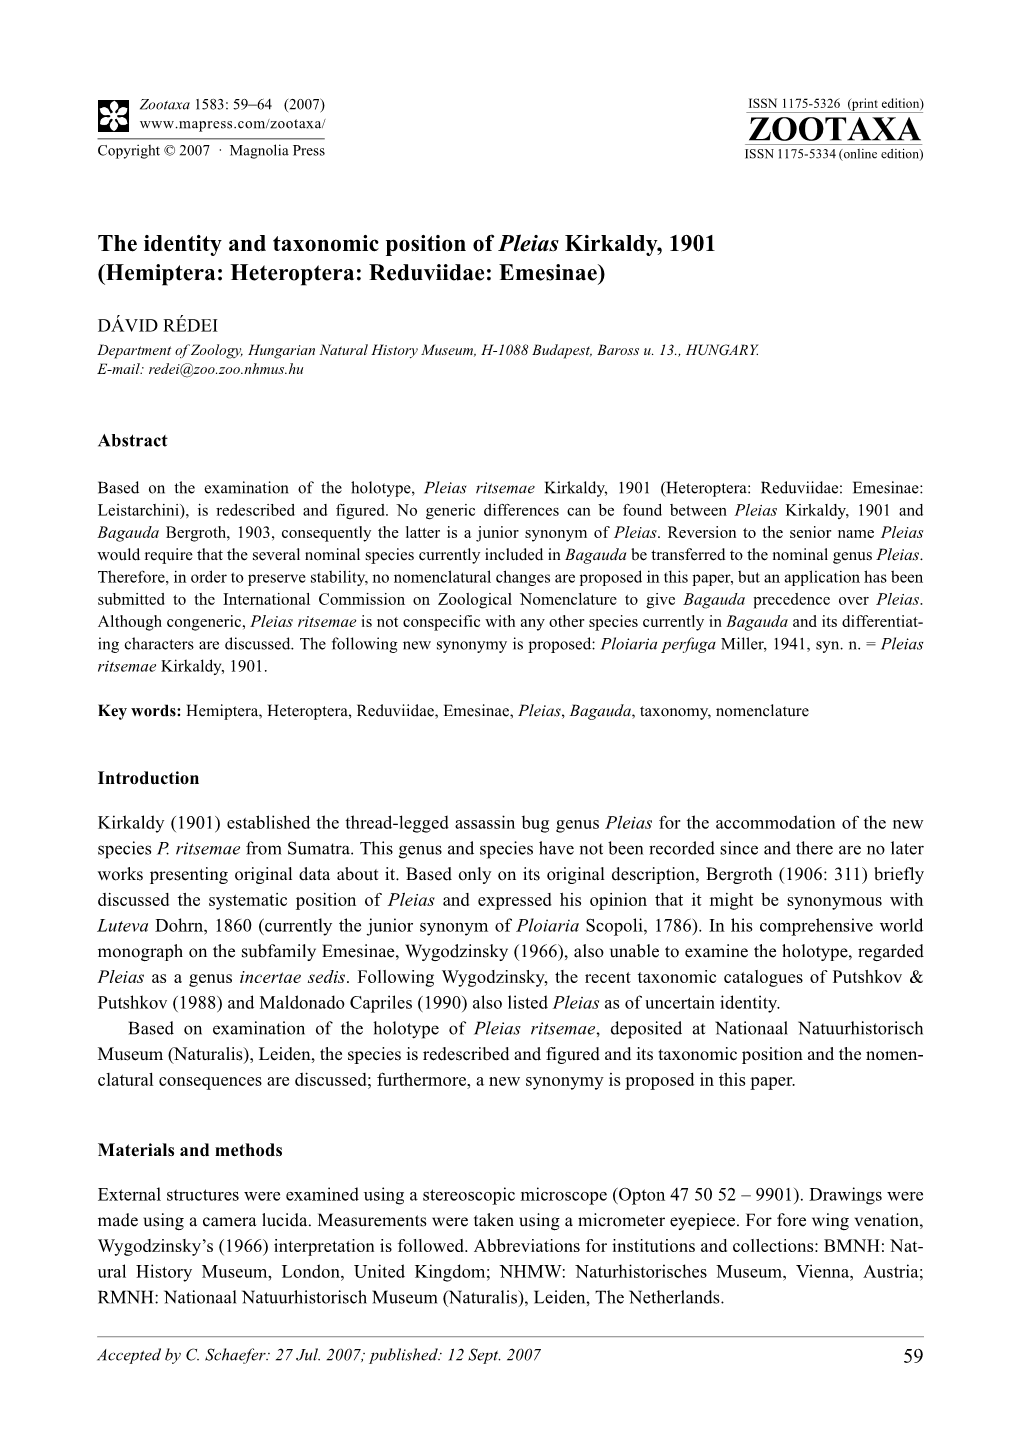 Zootaxa,The Identity and Taxonomic Position of Pleias Kirkaldy, 1901